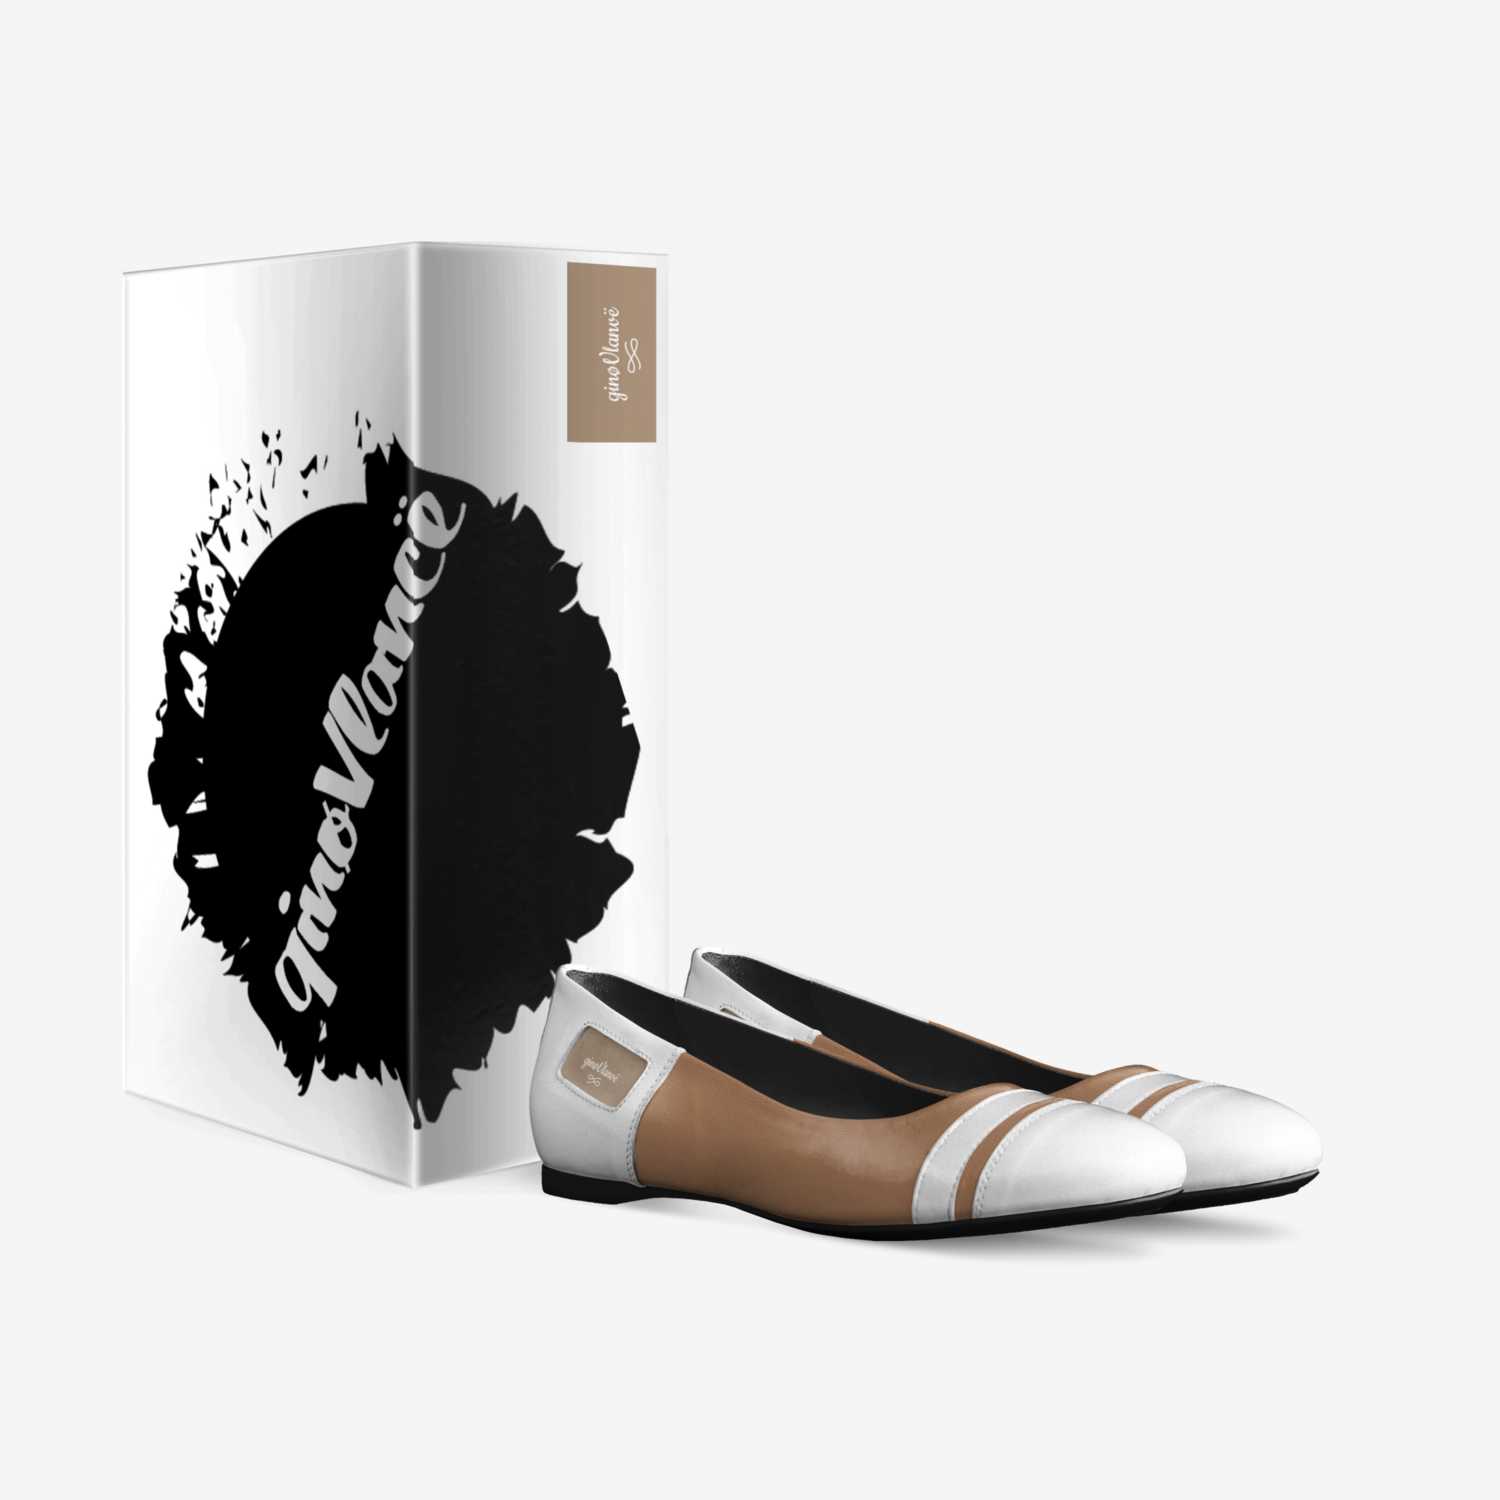 ginøVlanvë custom made in Italy shoes by Koi-arron Johnson | Box view